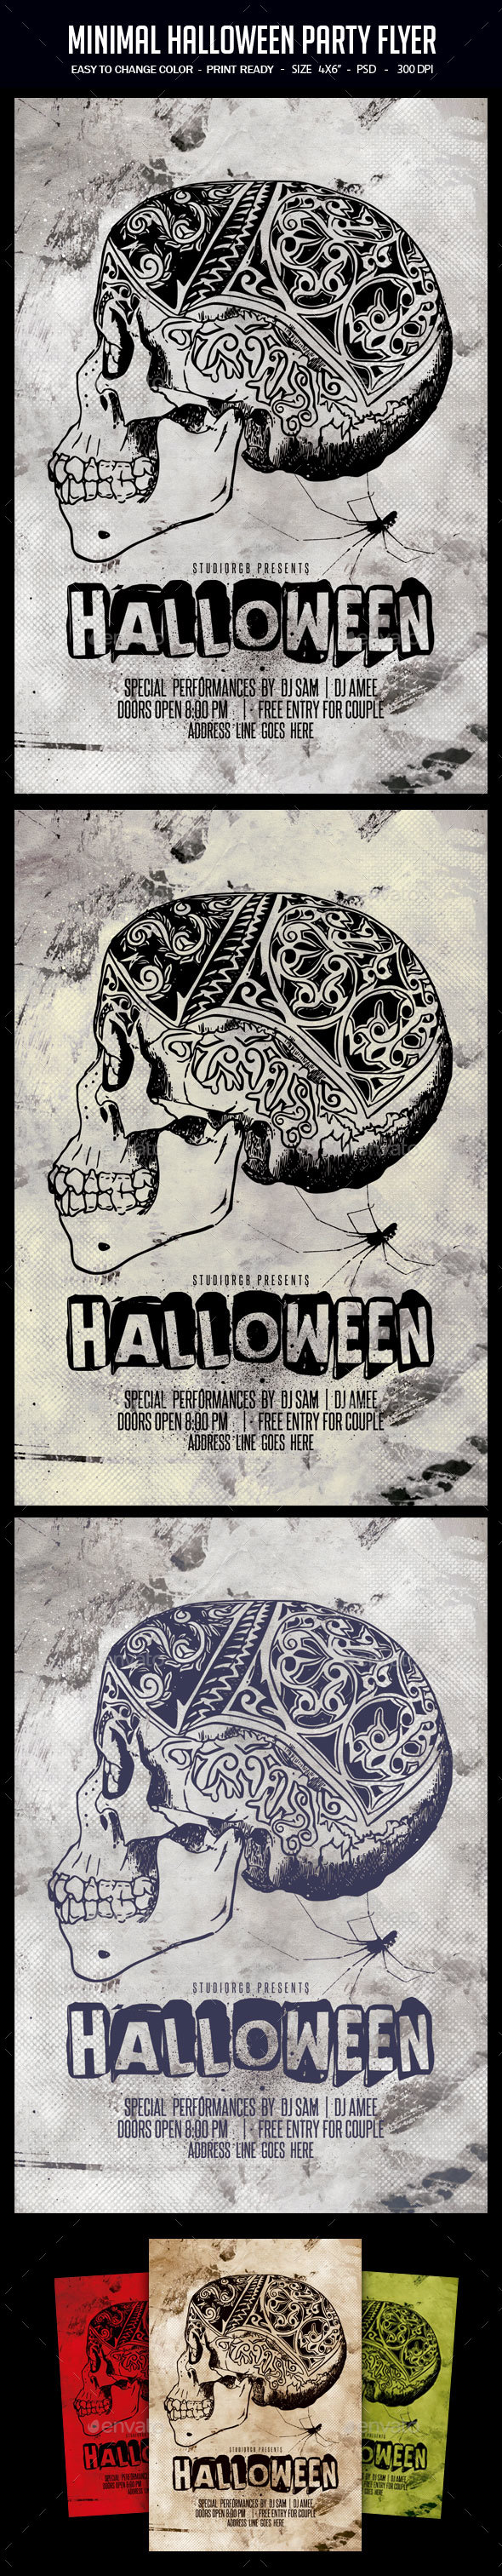 Minimal Halloween Party Flyer